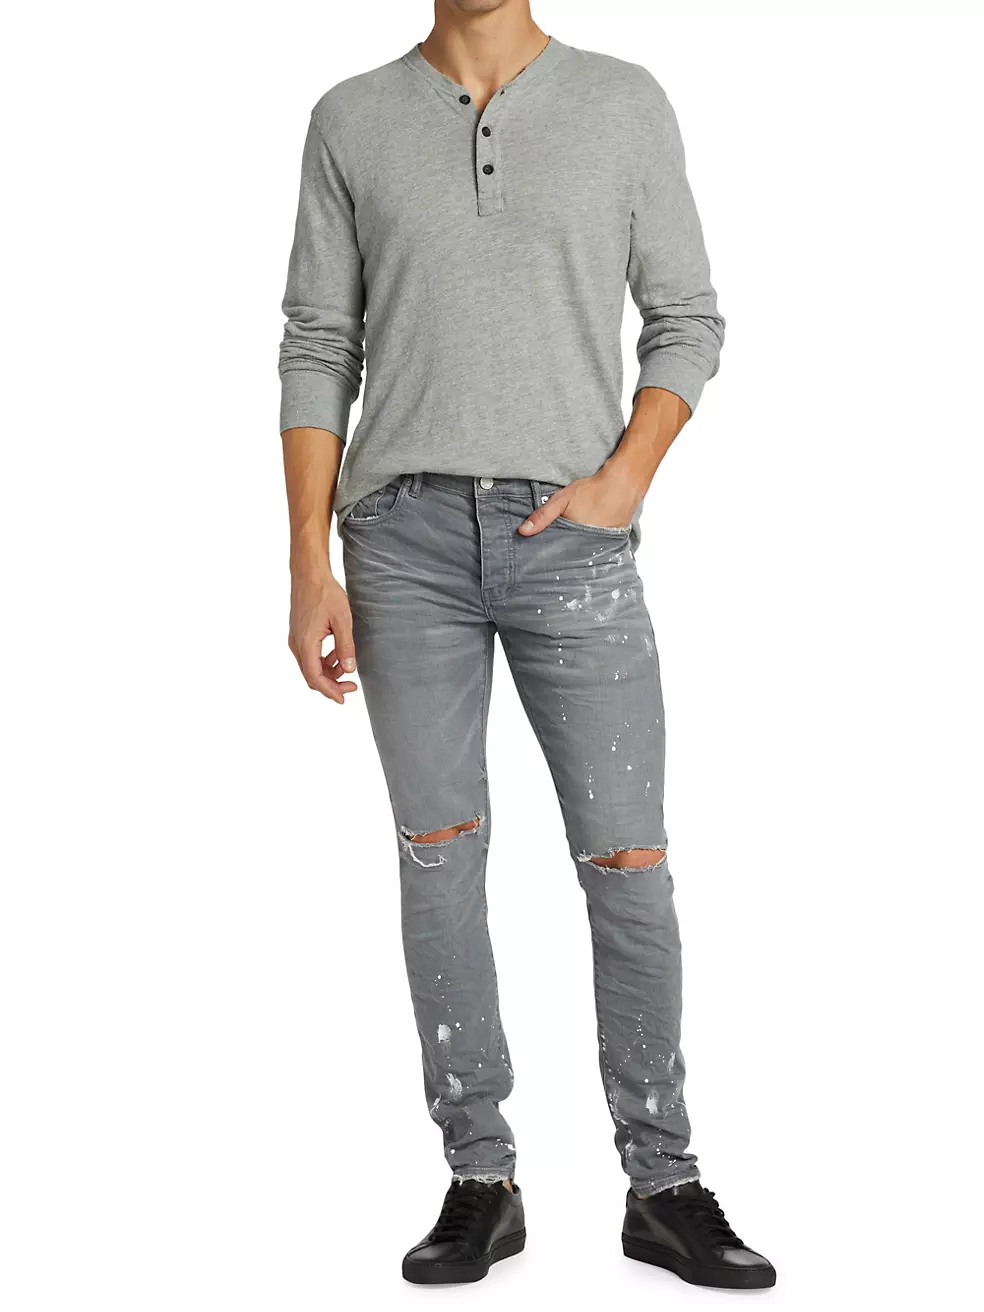 Purple Purple Brand Jeans Mens Slim Fit P001 $385 Size 28/30